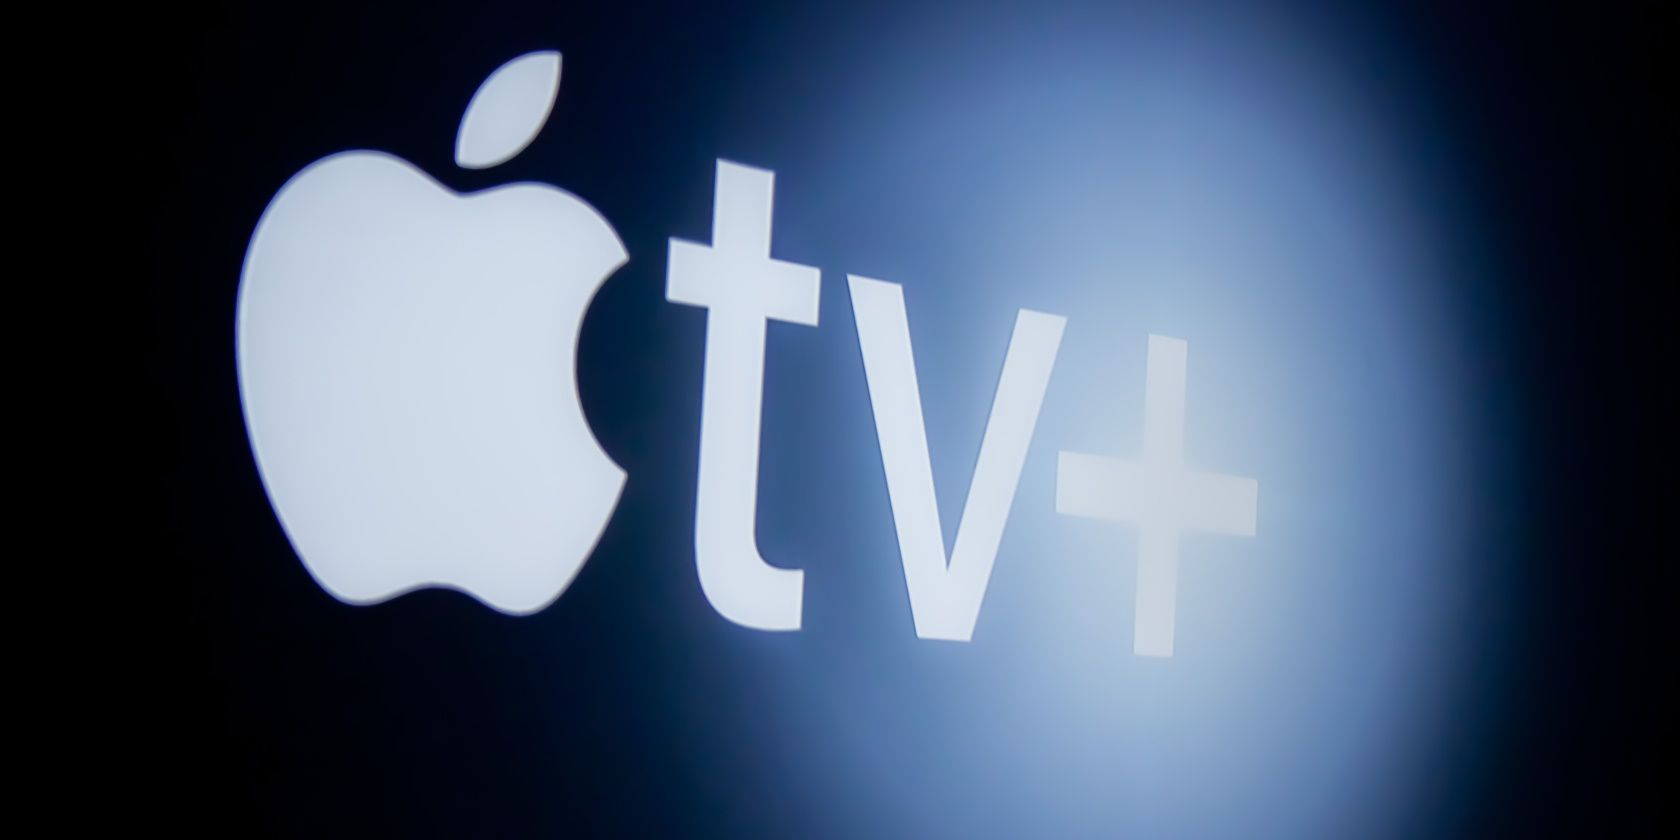 Apple-tv-plus-logo-feature